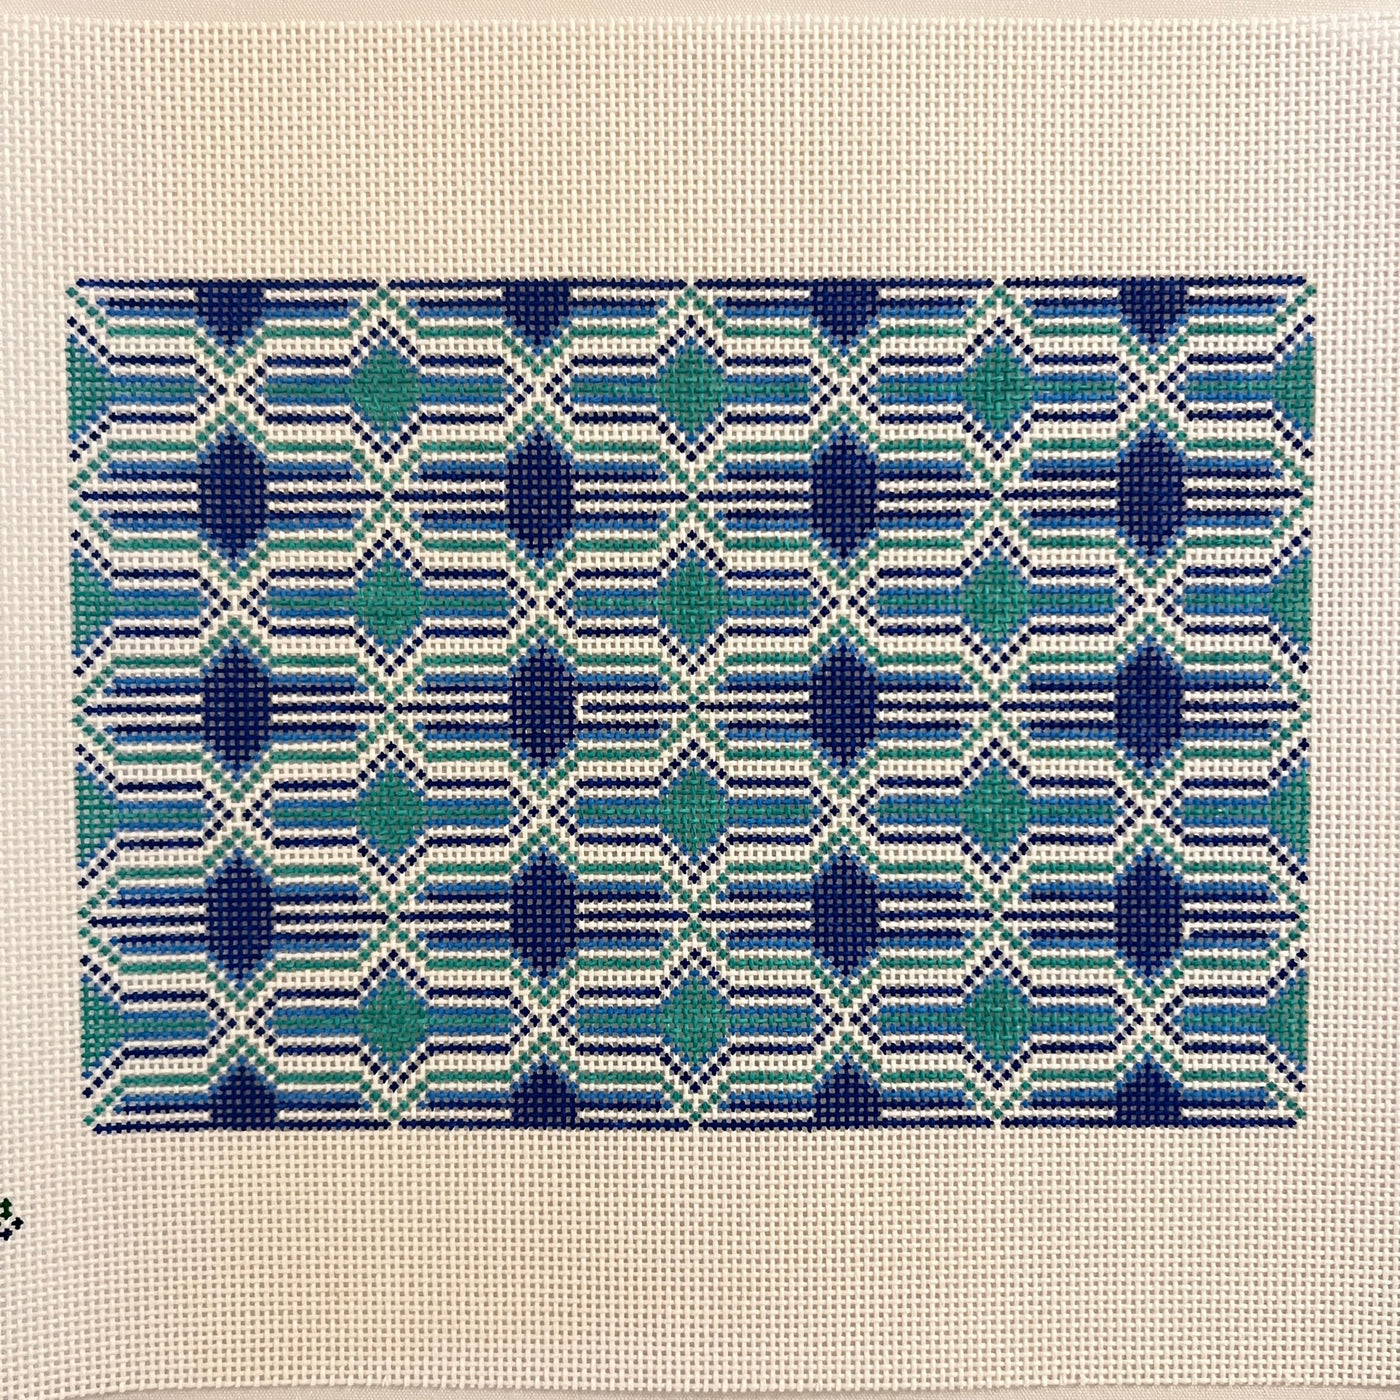 Granda Clutch - Blue Needlepoint Canvas